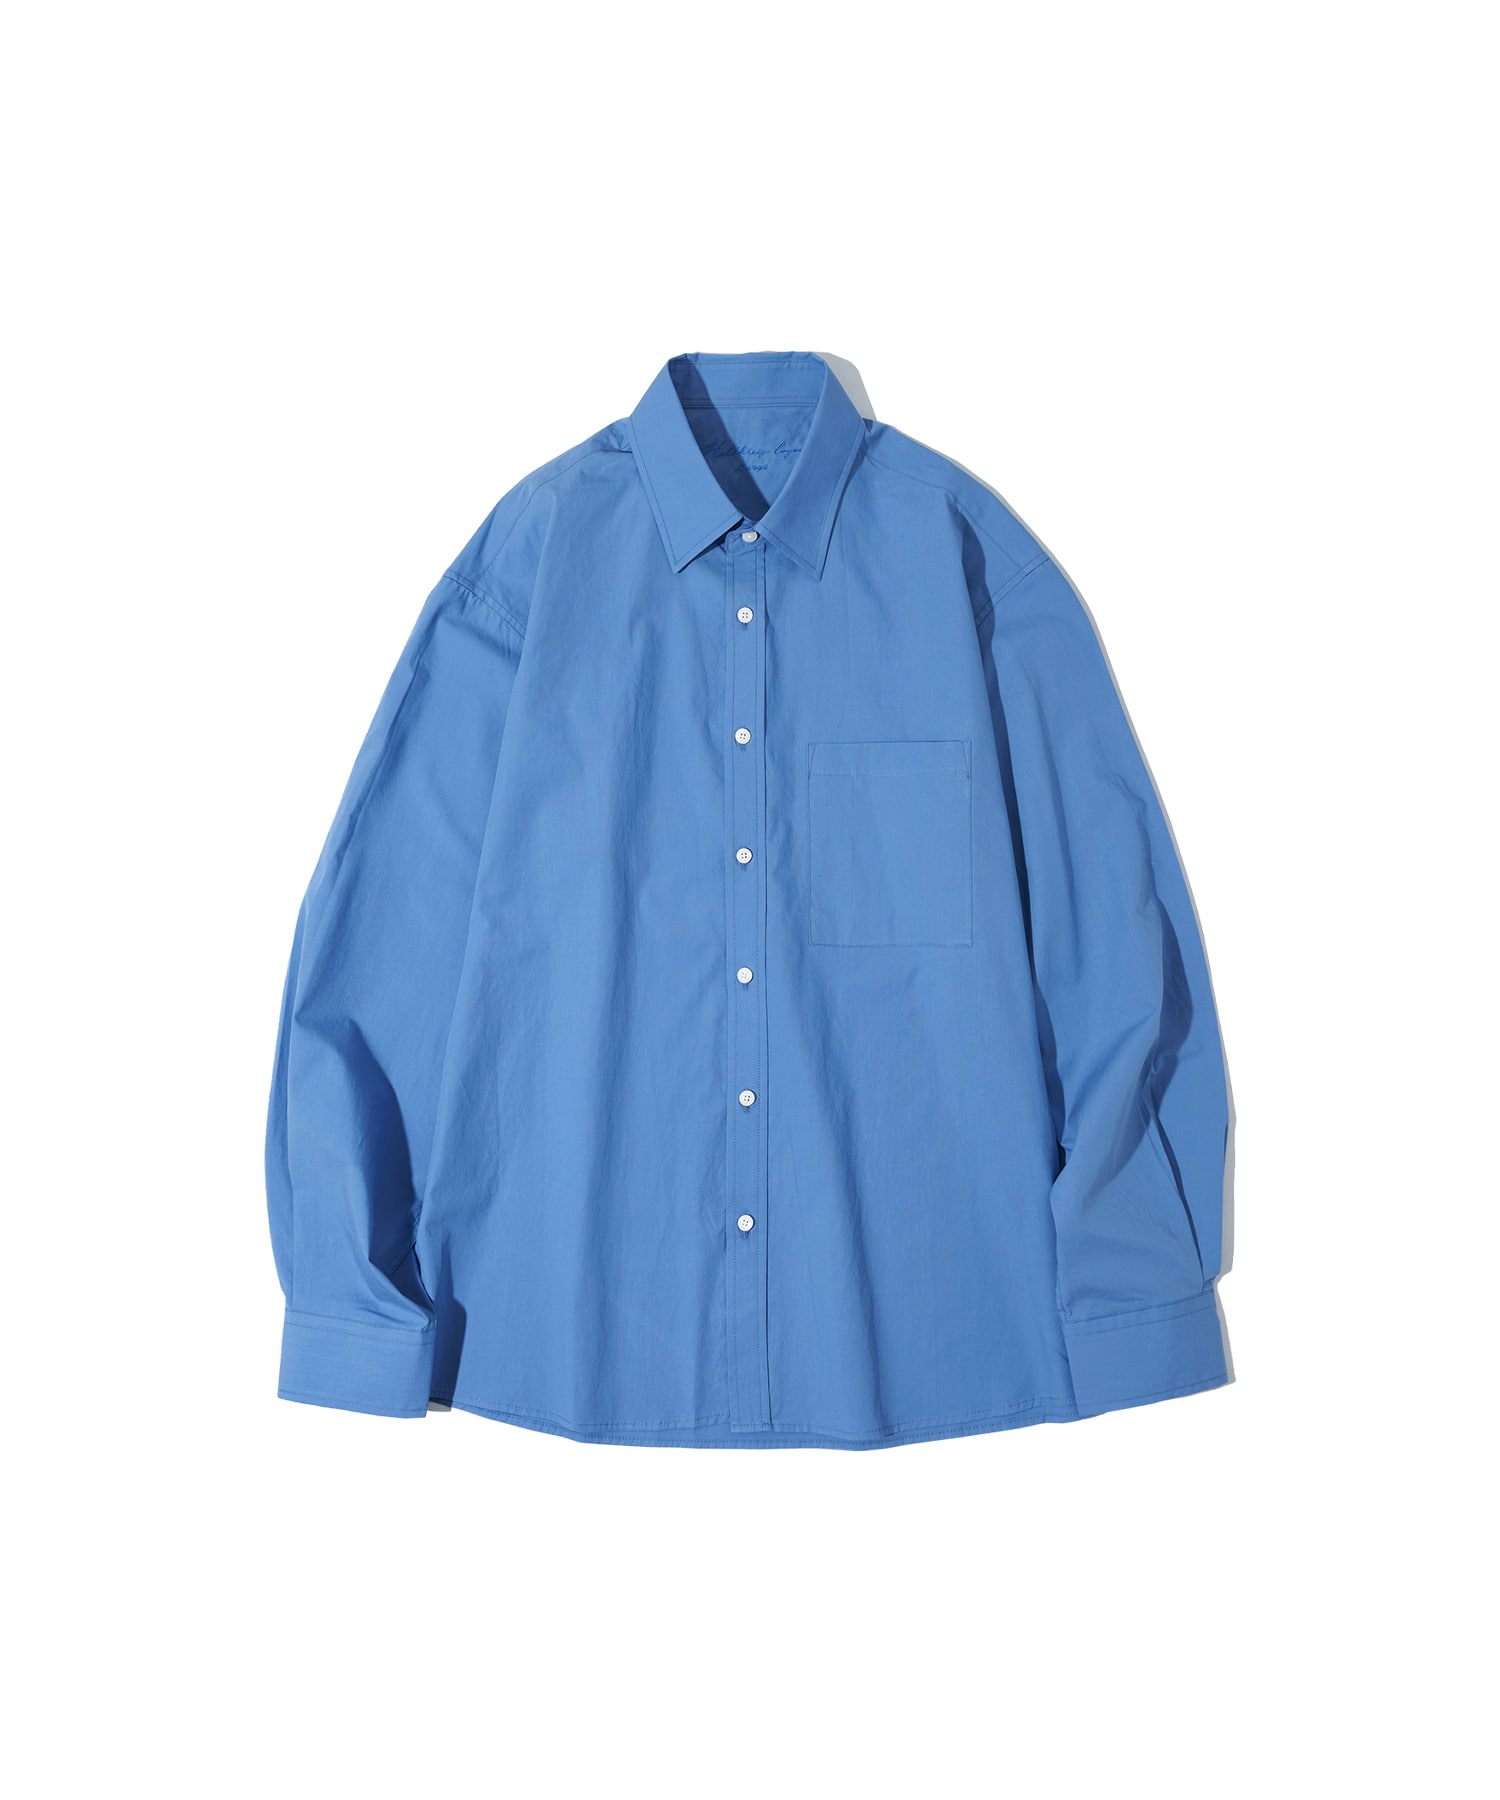 T6000 Pienza emotional shirt_Blue